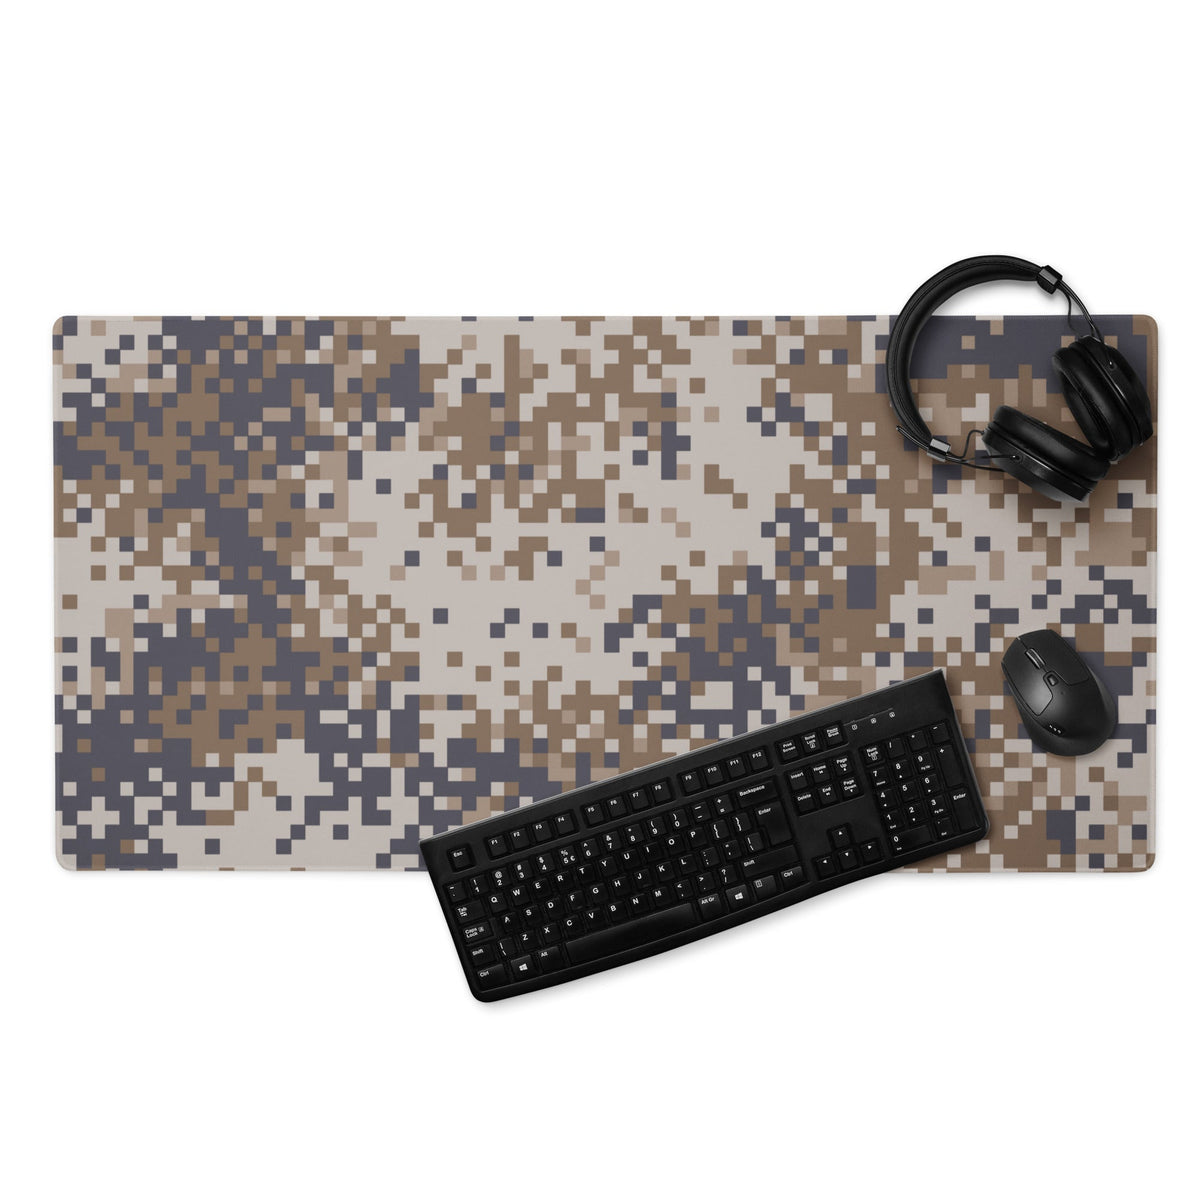 Latvian M07 LATPAT Desert CAMO Gaming mouse pad - 36″×18″